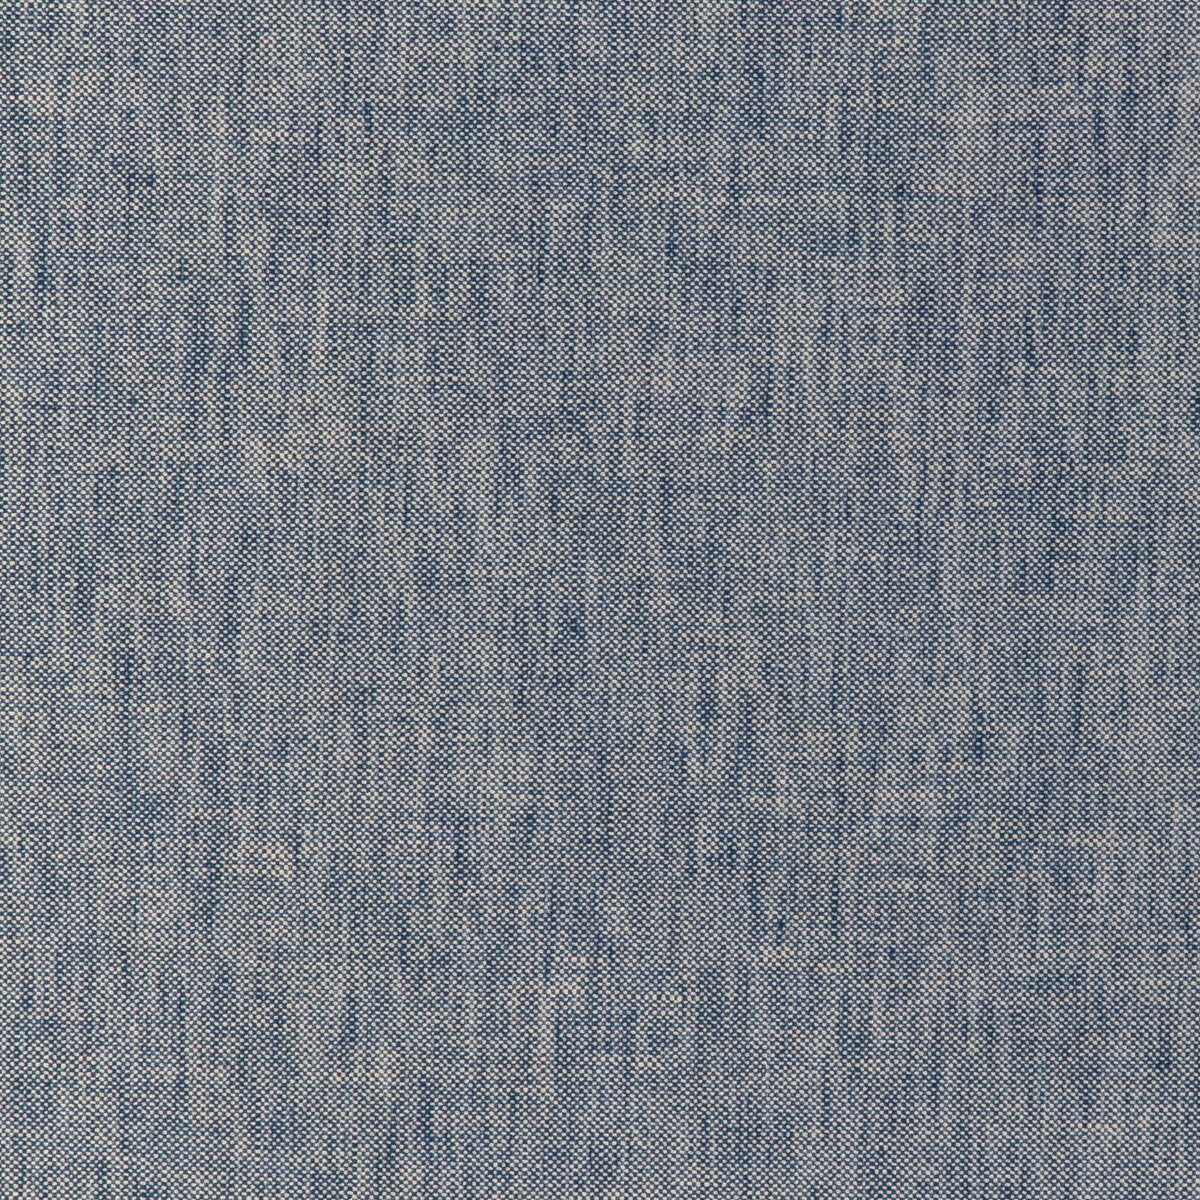 Kravet Smart fabric in 36657-5 color - pattern 36657.5.0 - by Kravet Smart in the Performance Kravetarmor collection